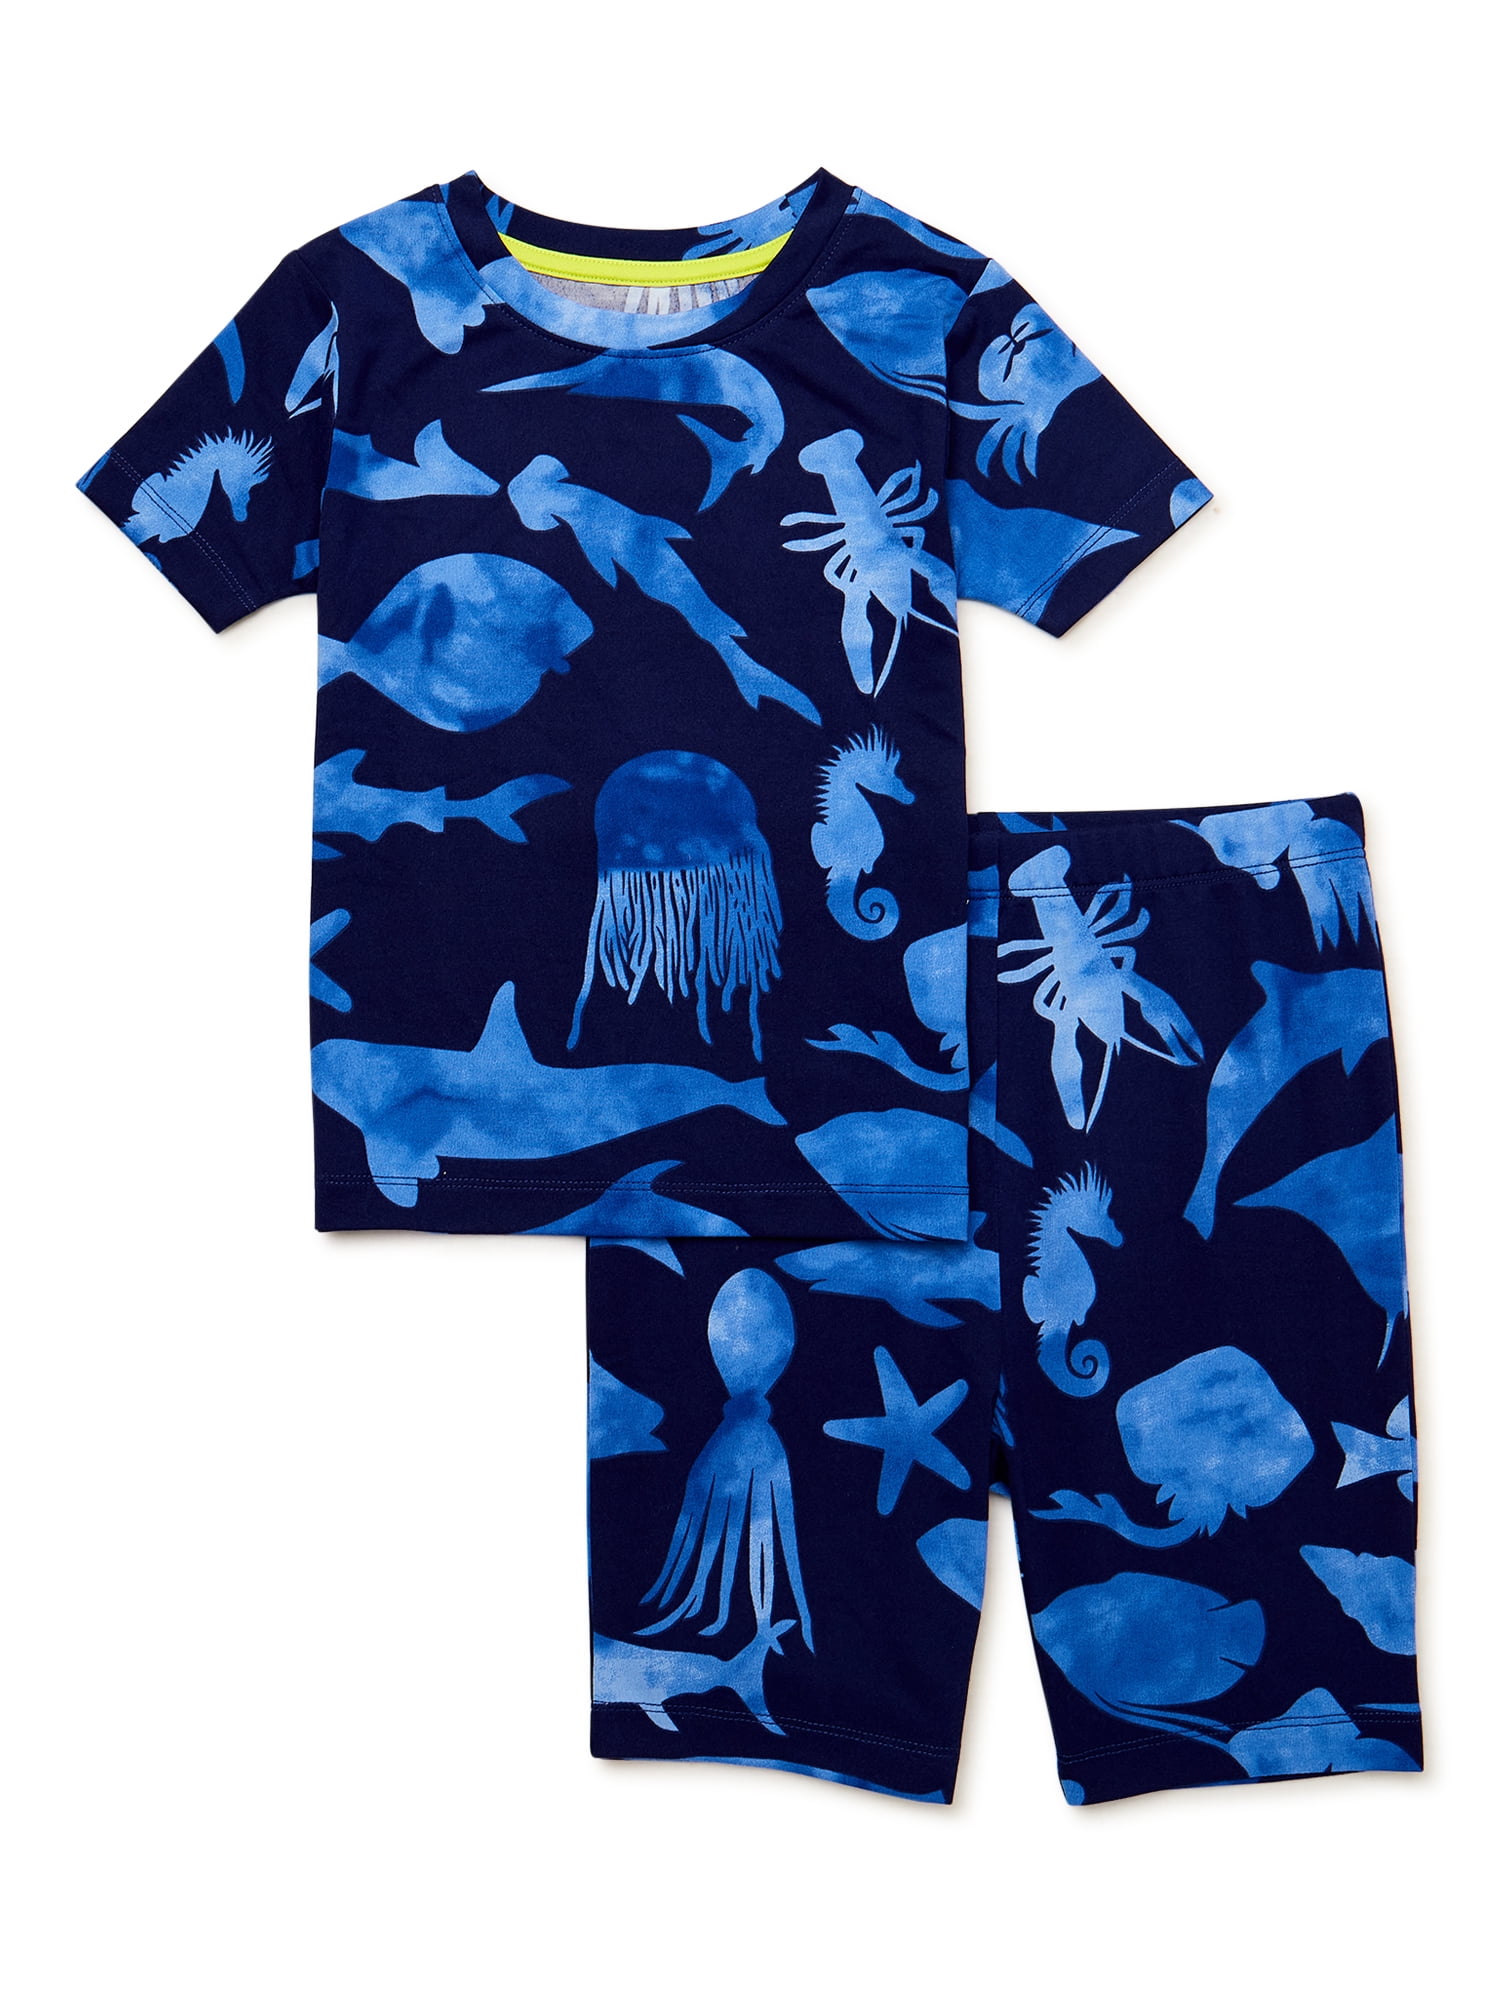 Major Cuddles Boys Short Sleeve Top and Shorts Pajama Sleep Set, 2 ...